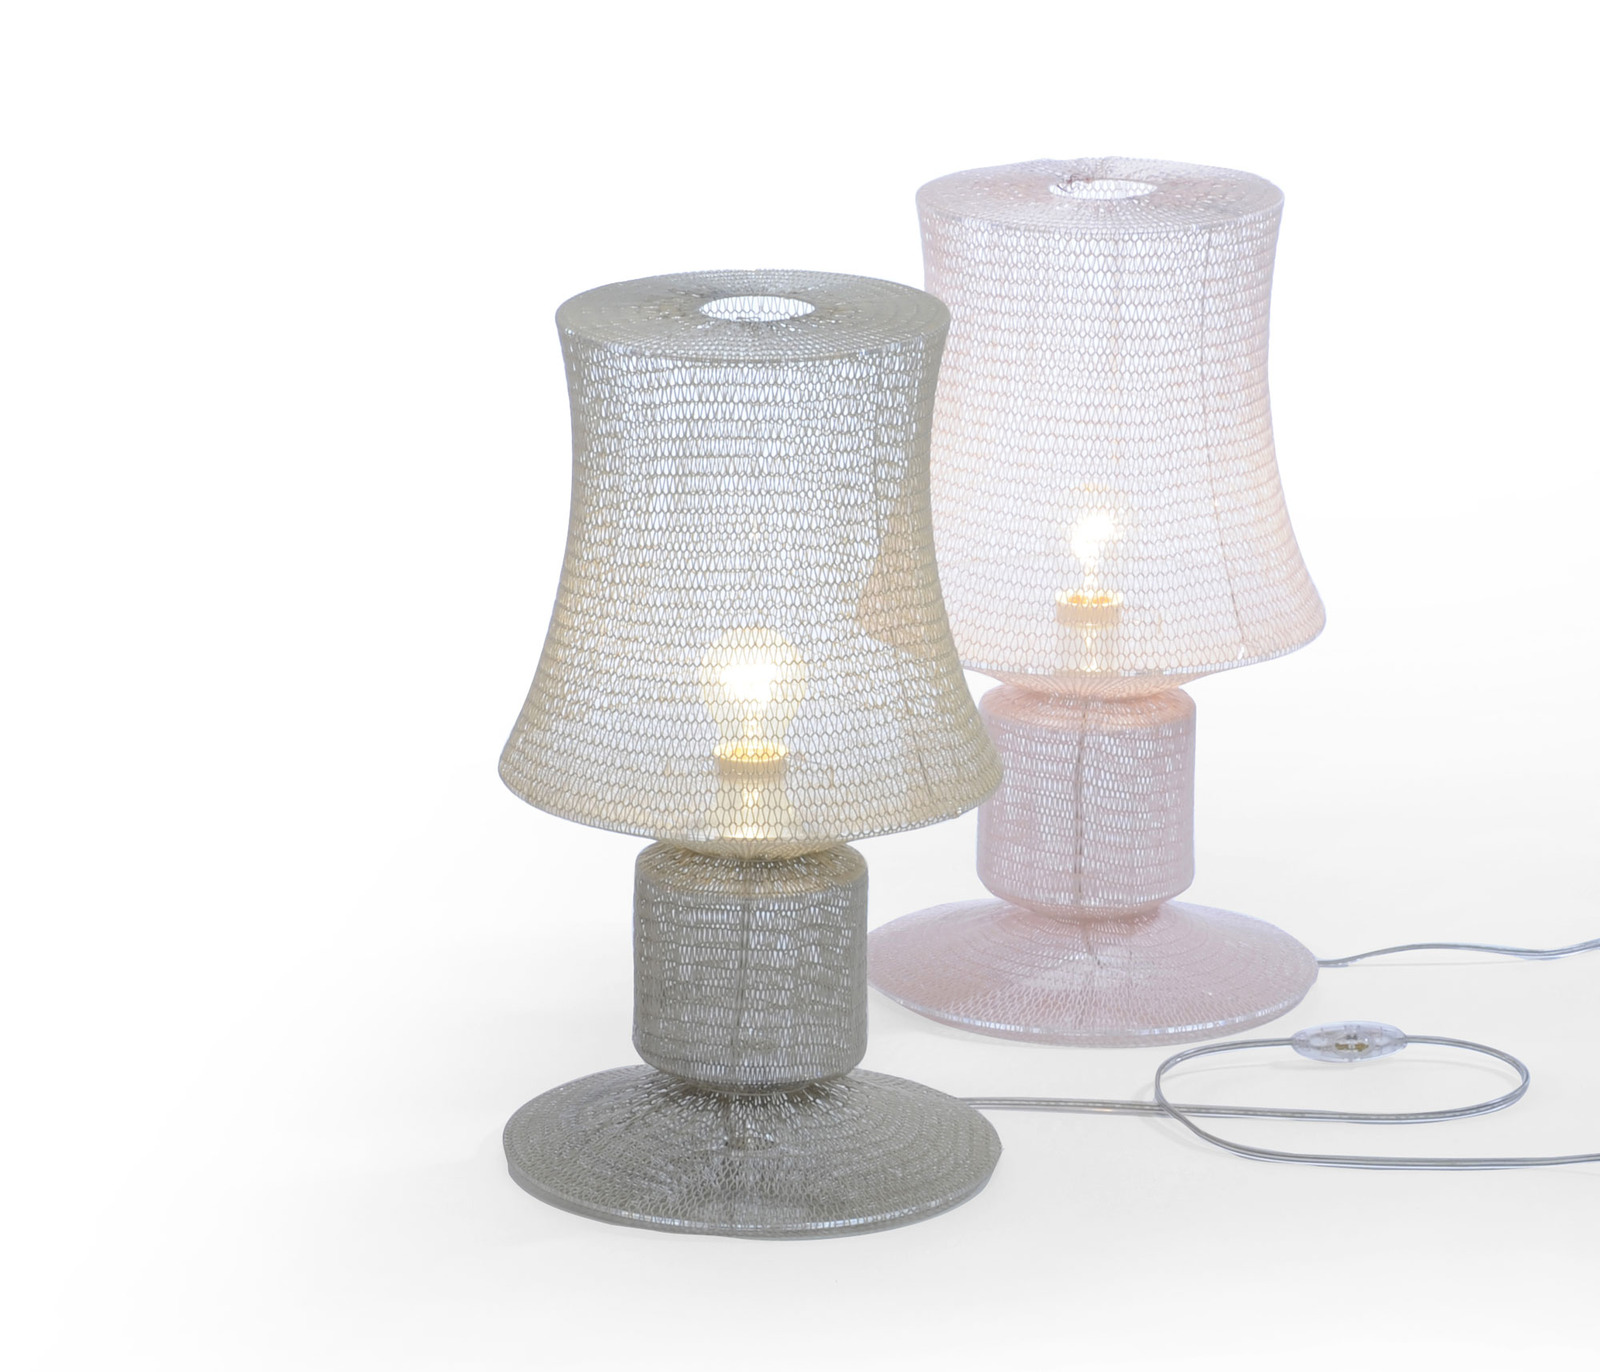 delicately-soft-knitted-lamps-studio-meike-harde-2.jpg